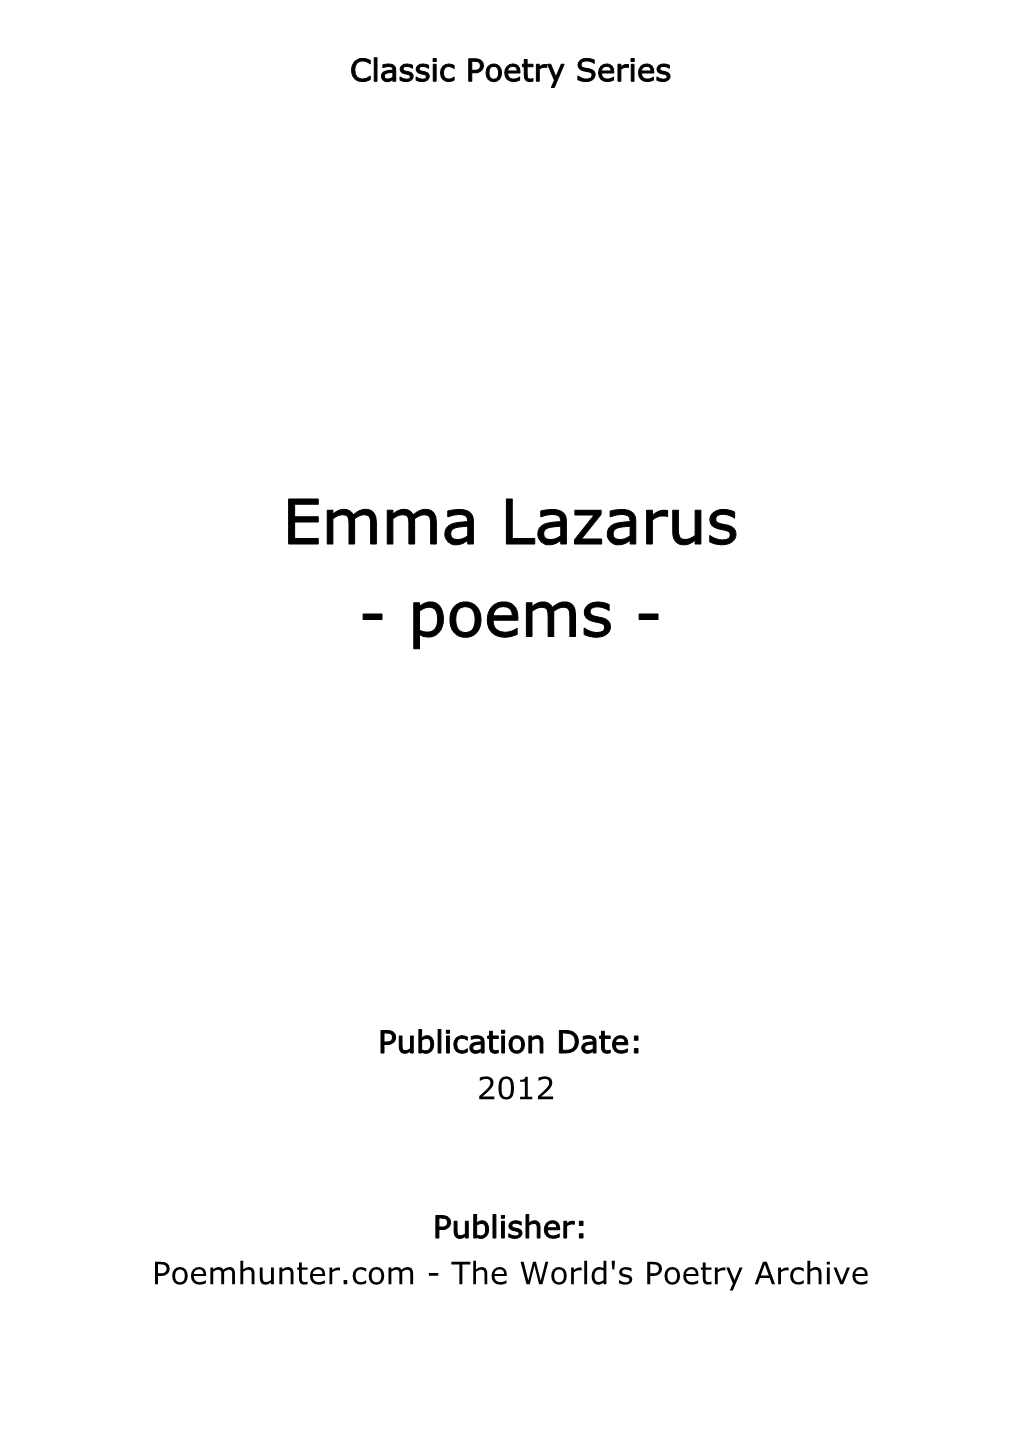 Emma Lazarus - Poems